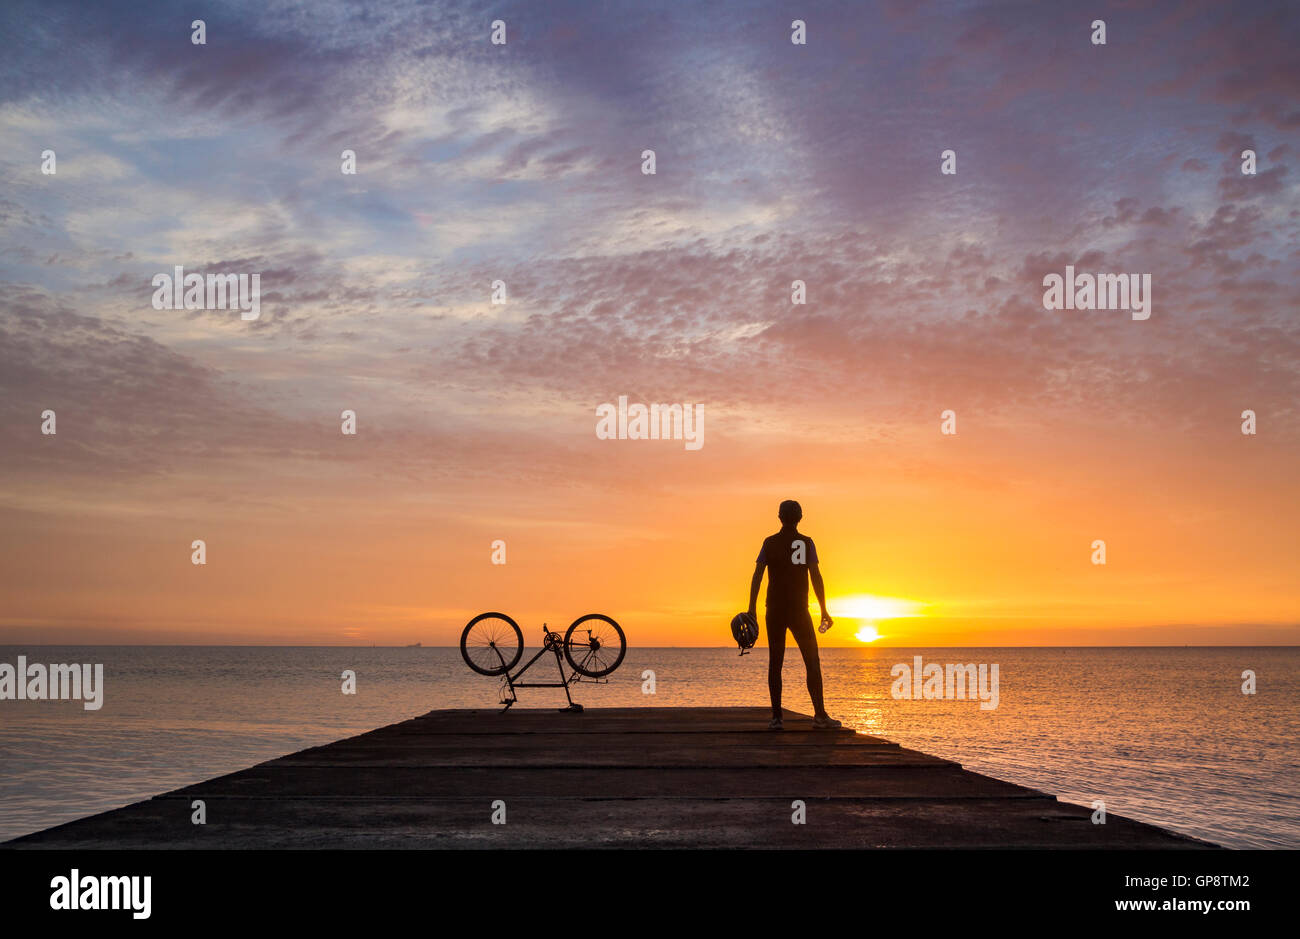 Mountain biker silhouetted at sunrise. UK Stock Photo